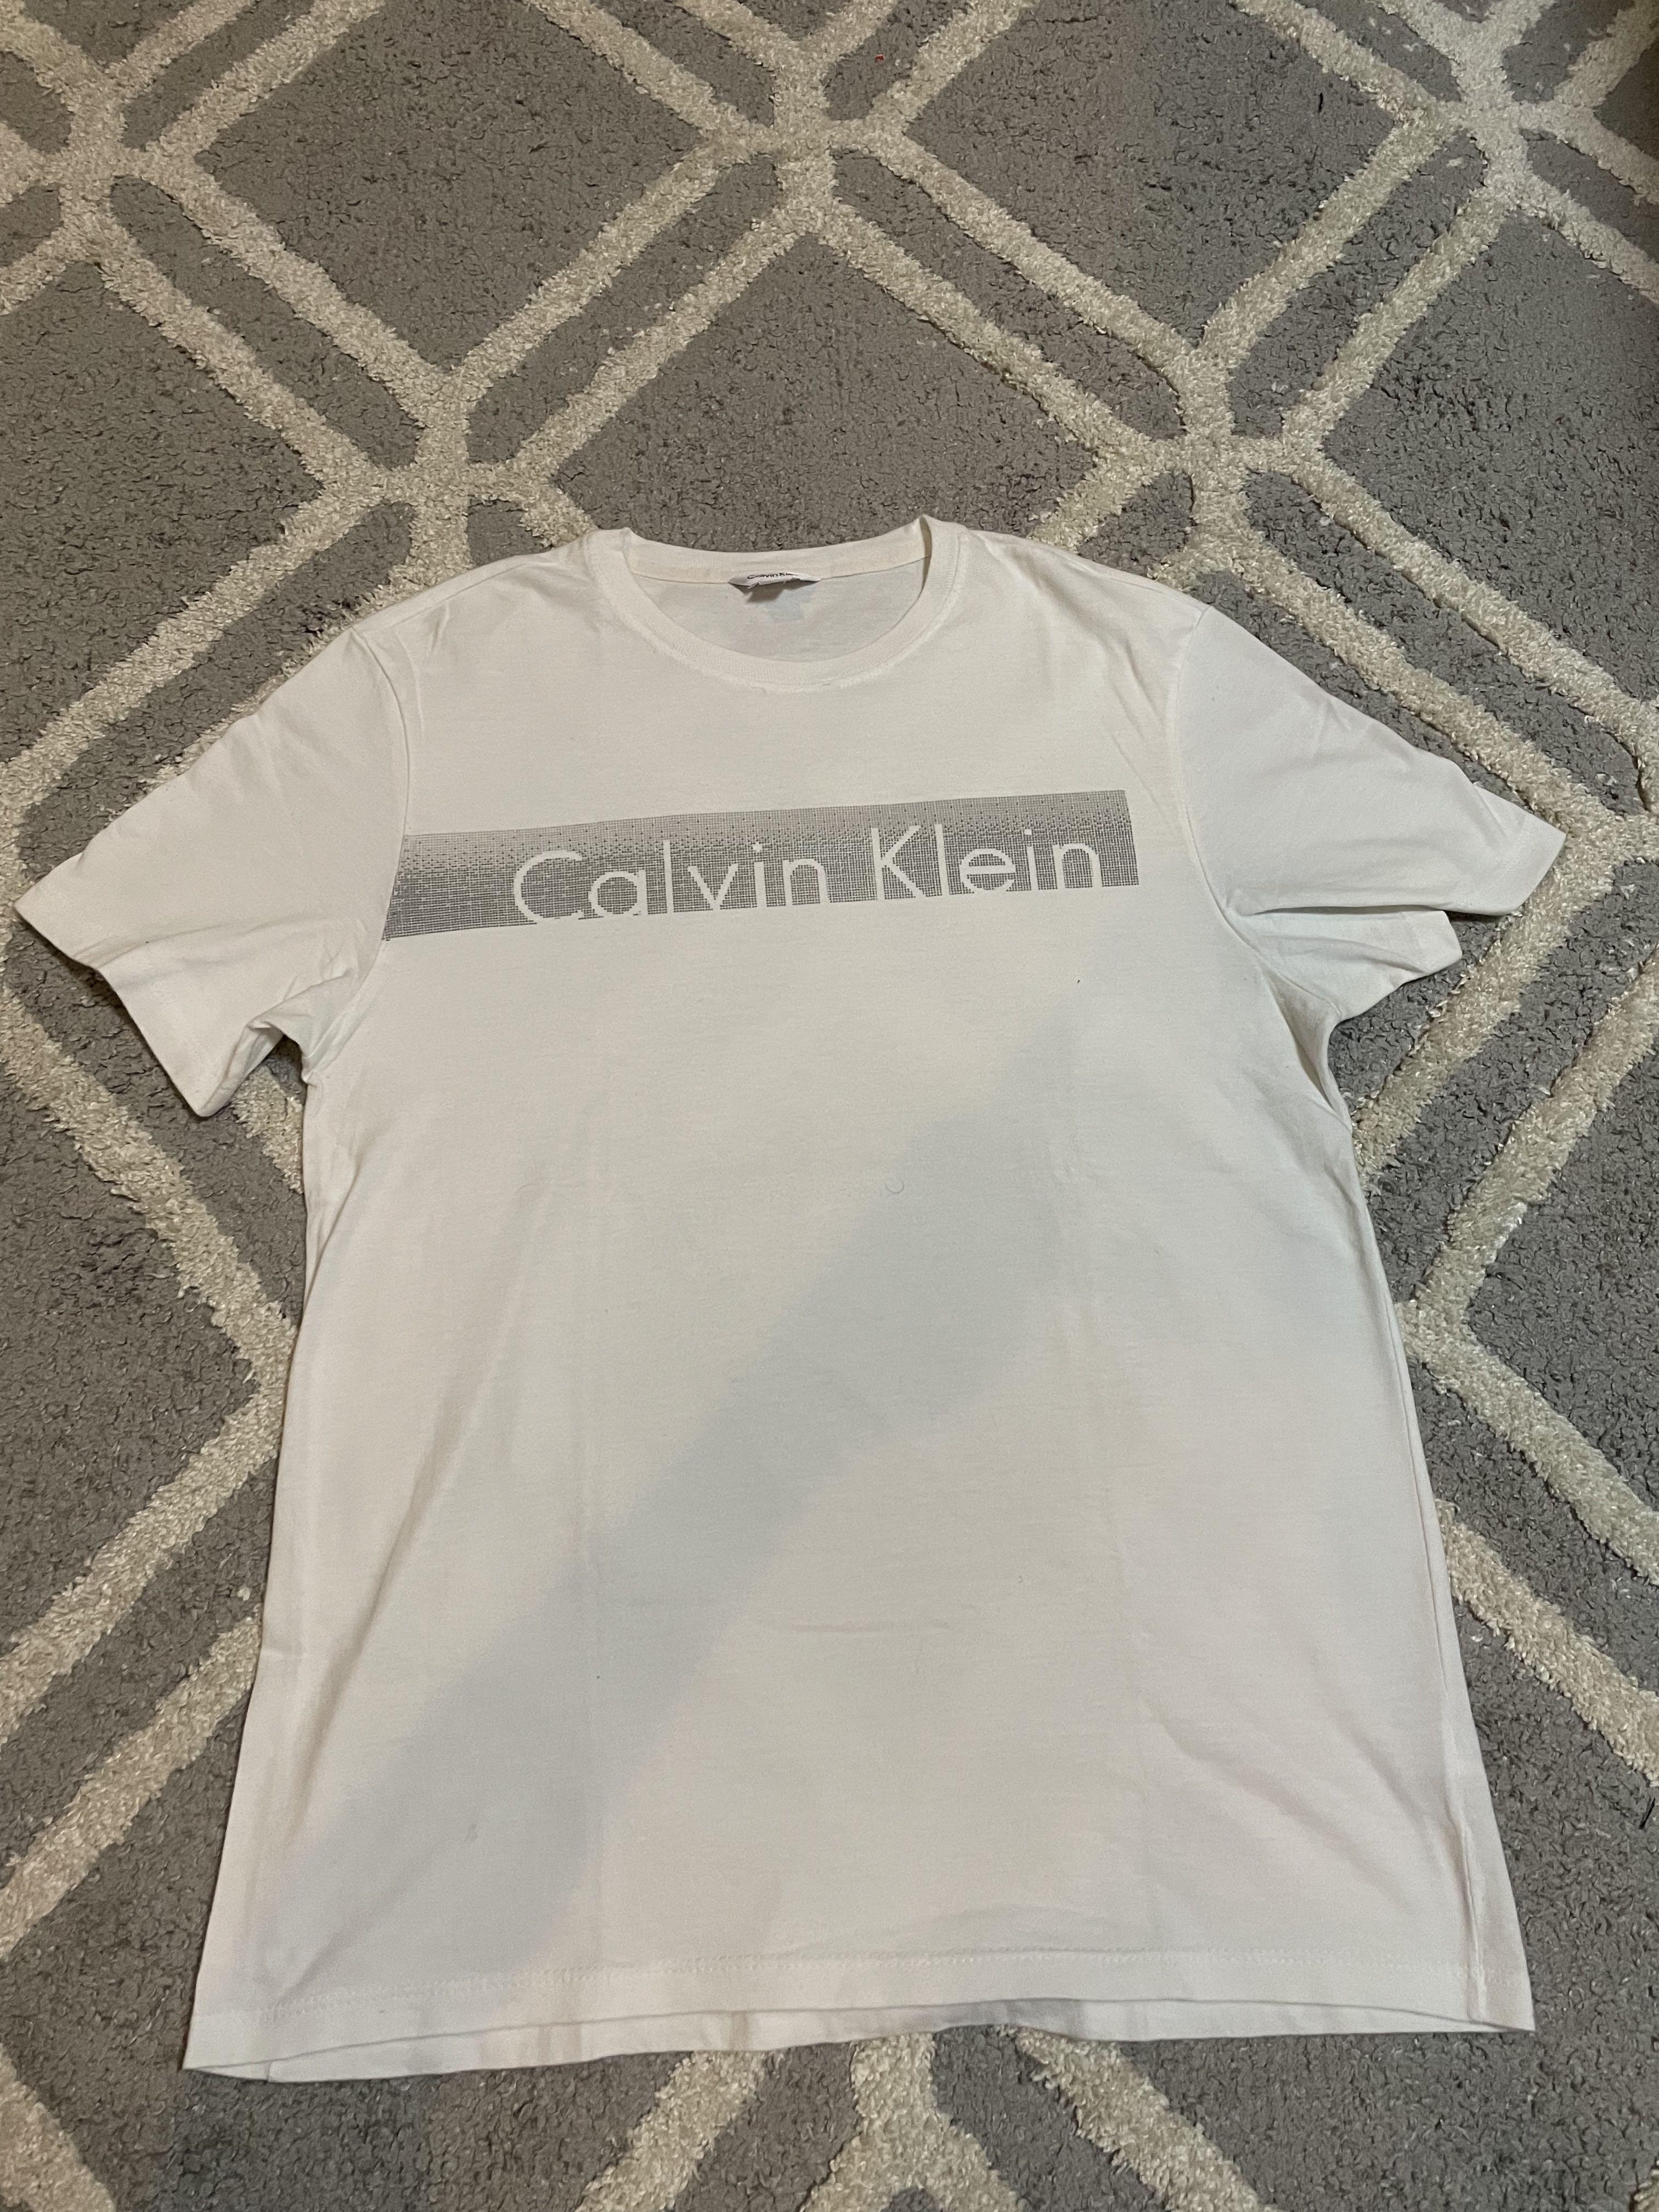 Calvin Klein white shirt, Men's Fashion, Tops & Sets, Tshirts